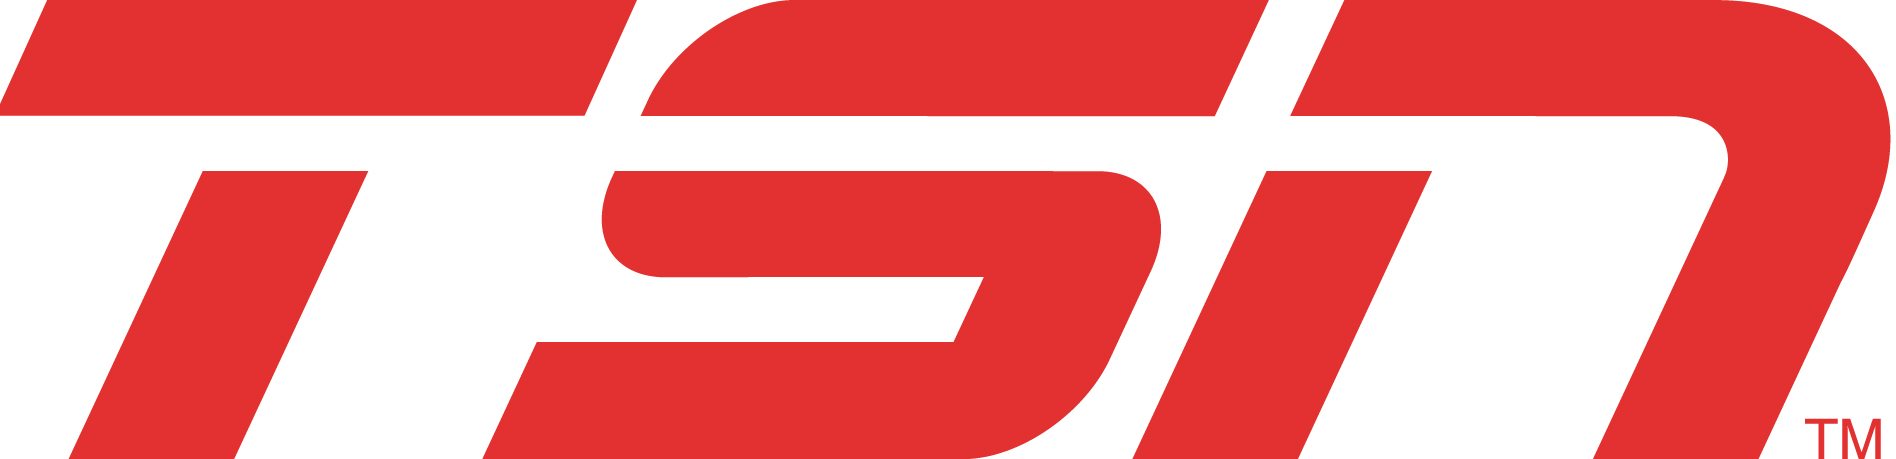 TSN-logo.jpg